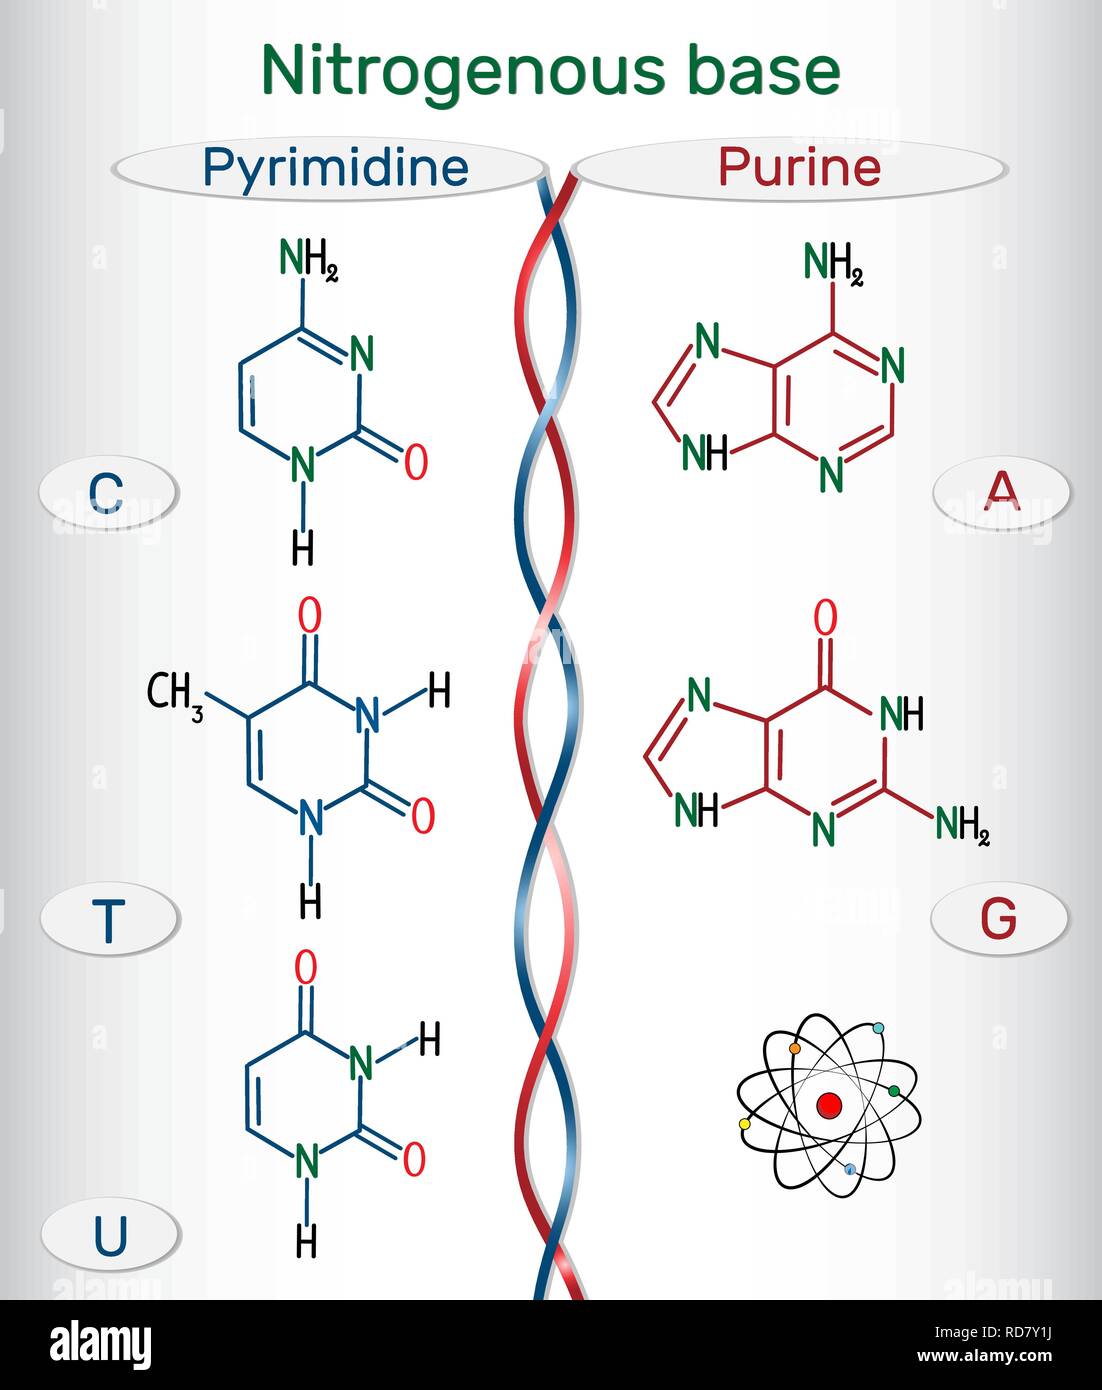 Fórmulas estructurales químicas de purina y pyrimidine bases nitrogenadas:  adenina (A, Ade), guanina (G, Gua) , timina (T, Tu), uracil (U), citosina  Imagen Vector de stock - Alamy